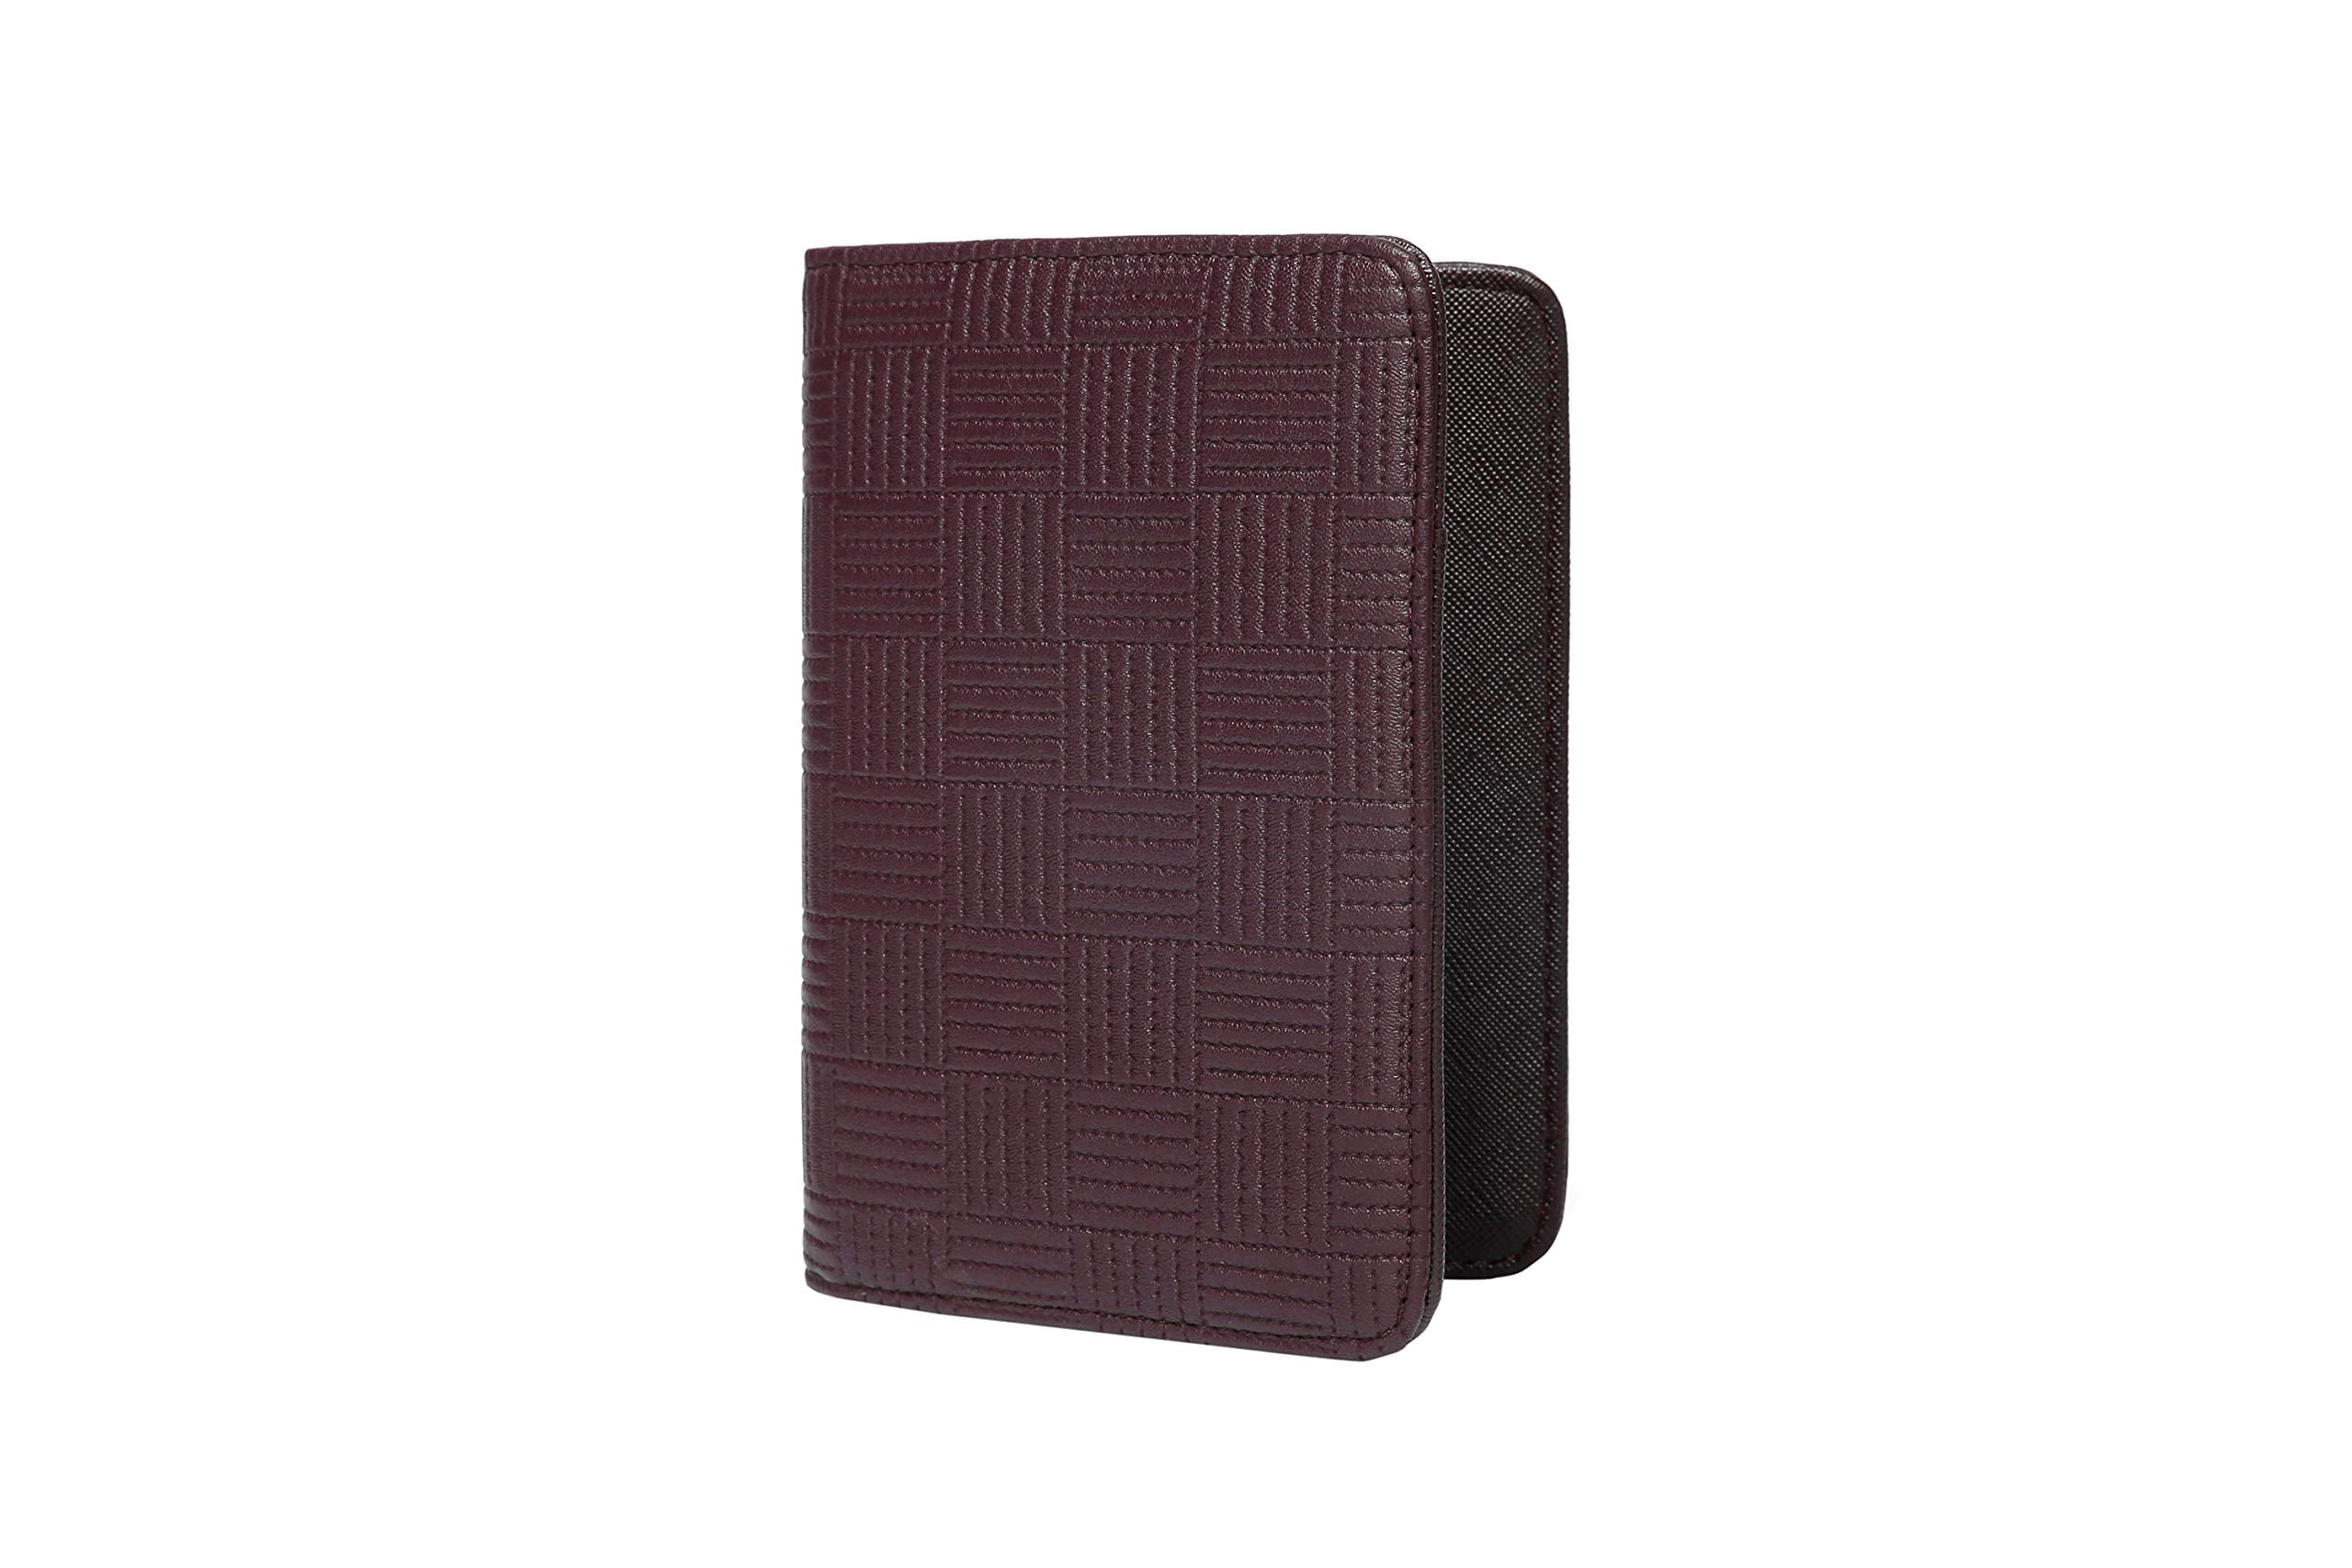 Daisy Rose Luxury Passport Holder Cover Case | PU Vegan Leather RFID Travel  Organizer Card Holder - Pink Snake